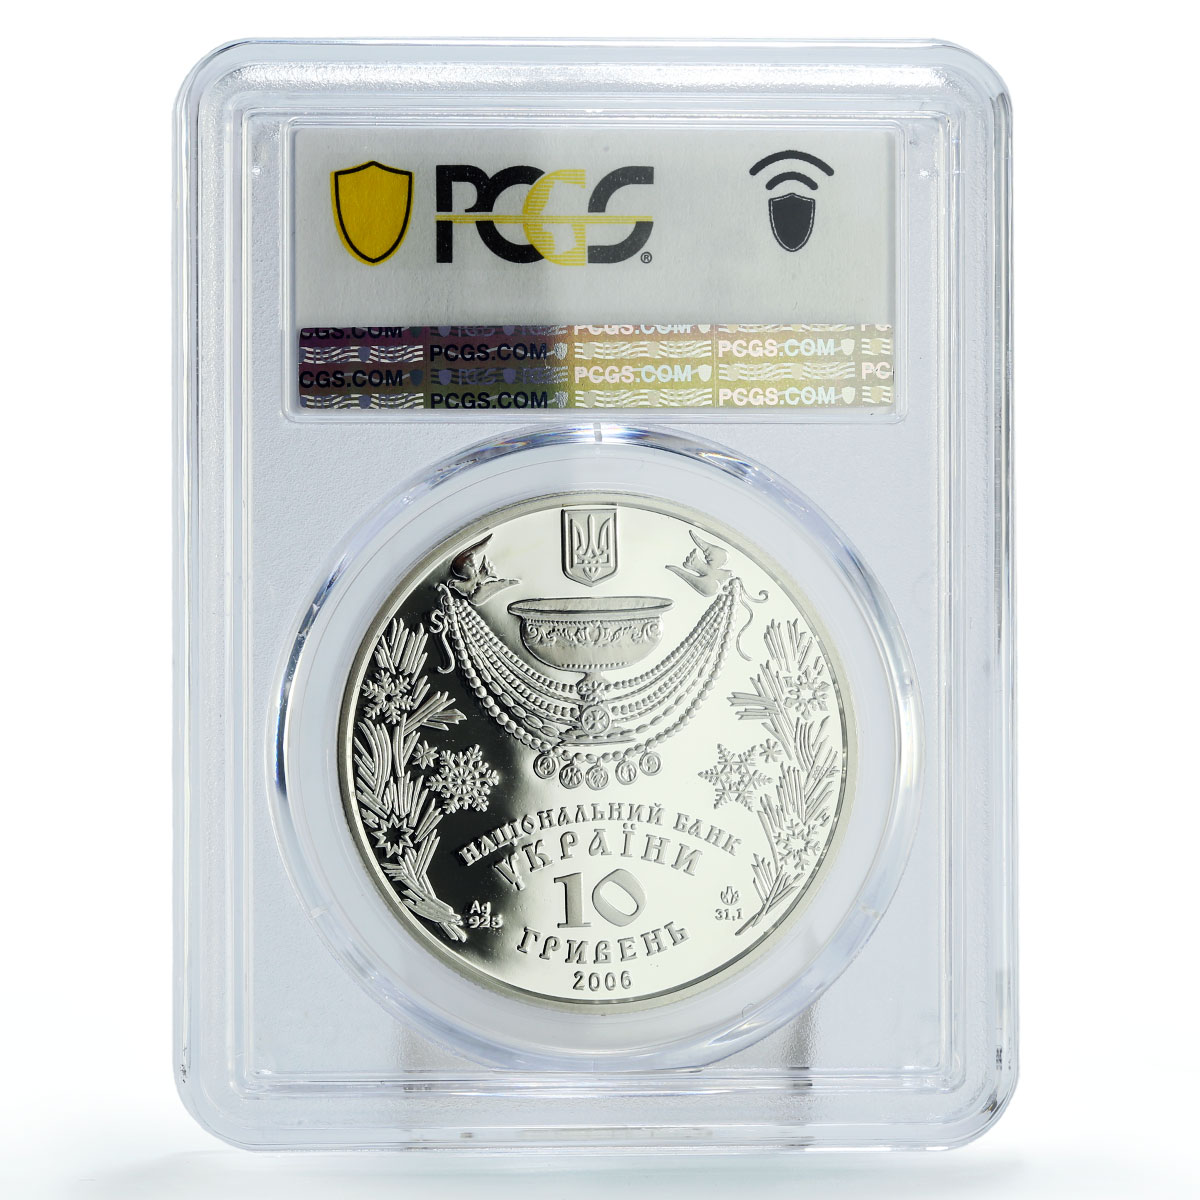 Ukraine 10 hryvnias Ritual Holidays Orthodox Epiphany PR69 PCGS silver coin 2006